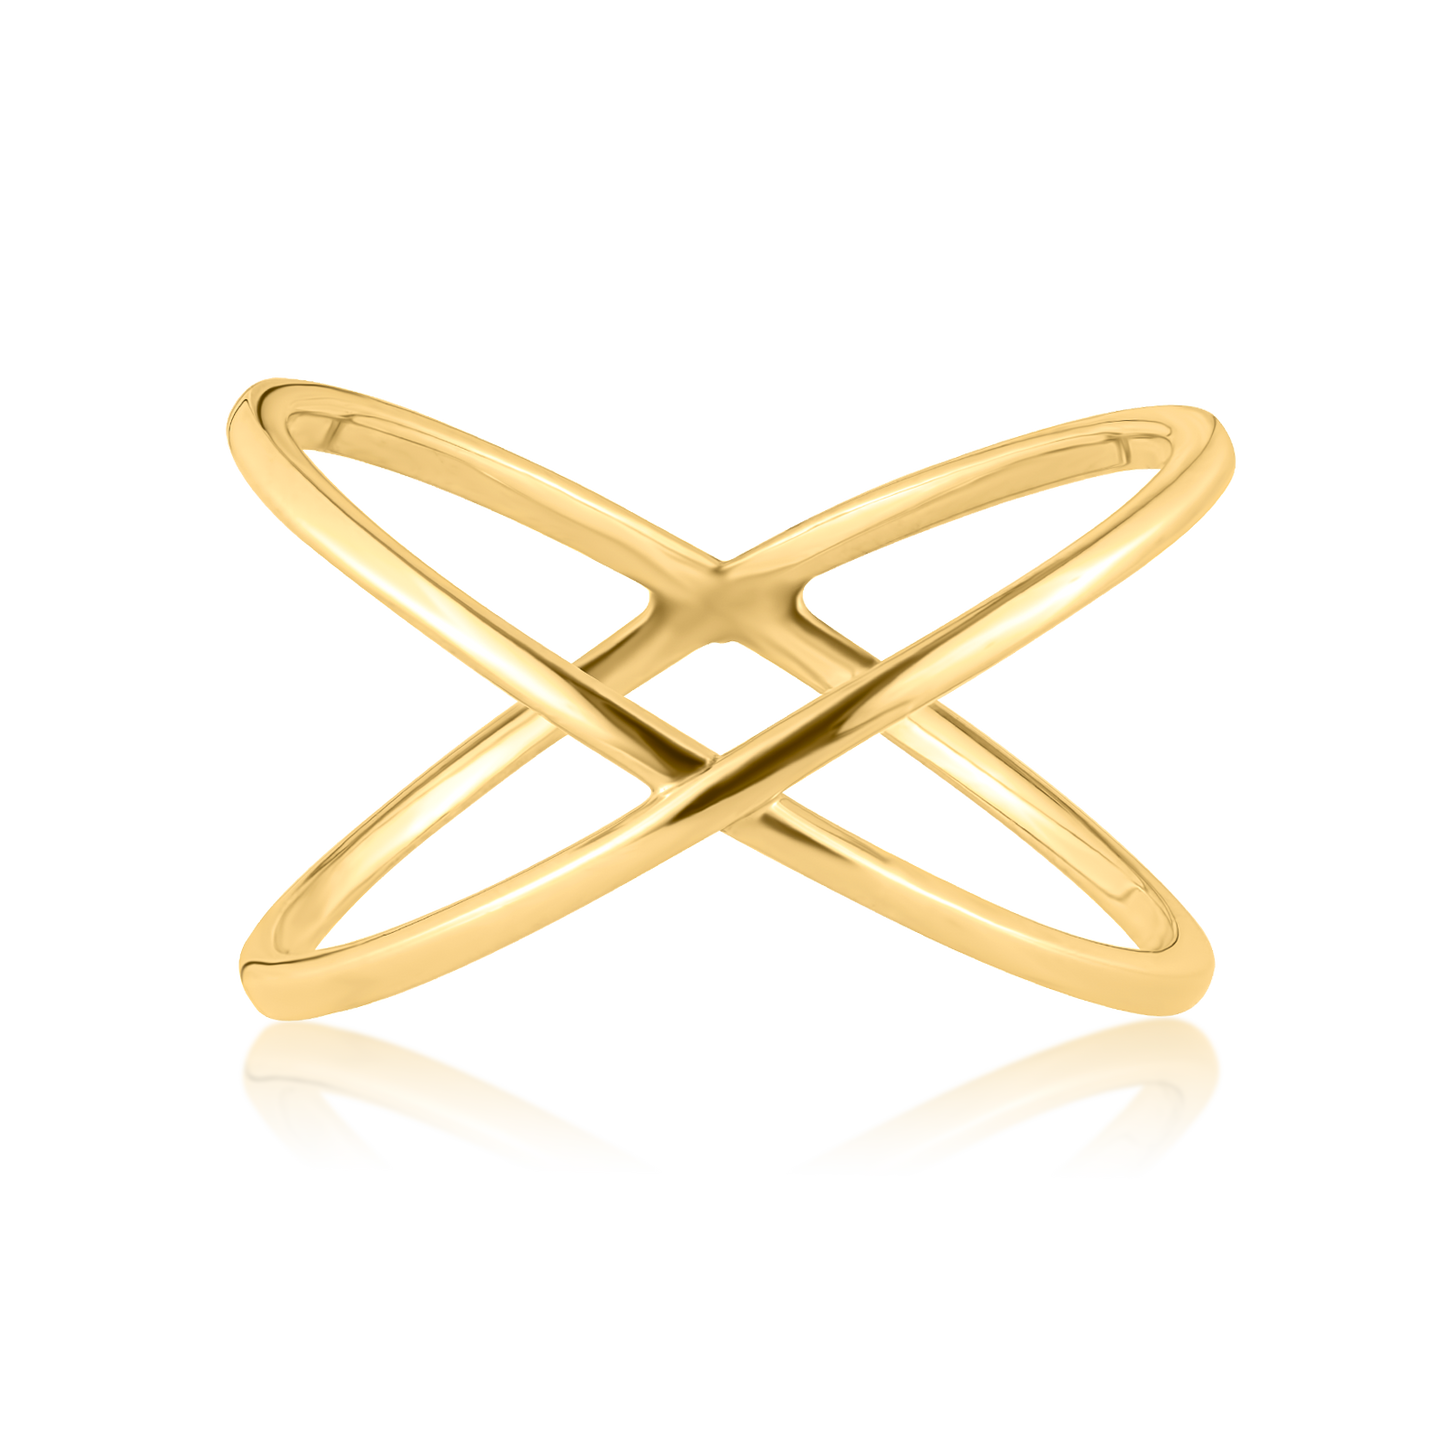 18K Yellow Gold "X" Ring